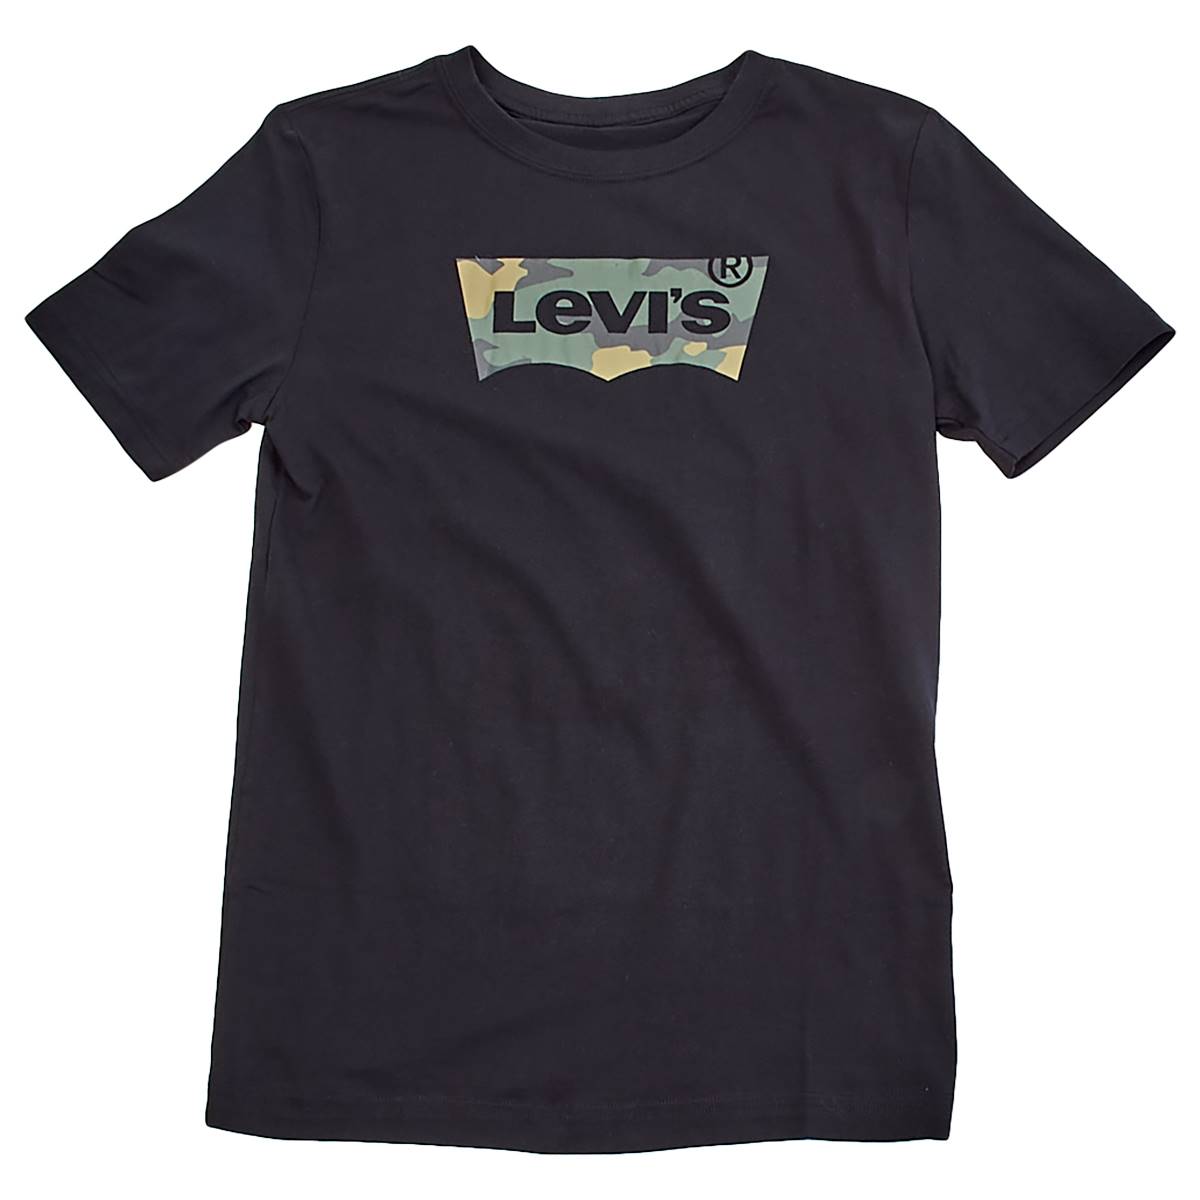 Boys (8-20) Levi's(R) Short Sleeve Graphic Tee - Black